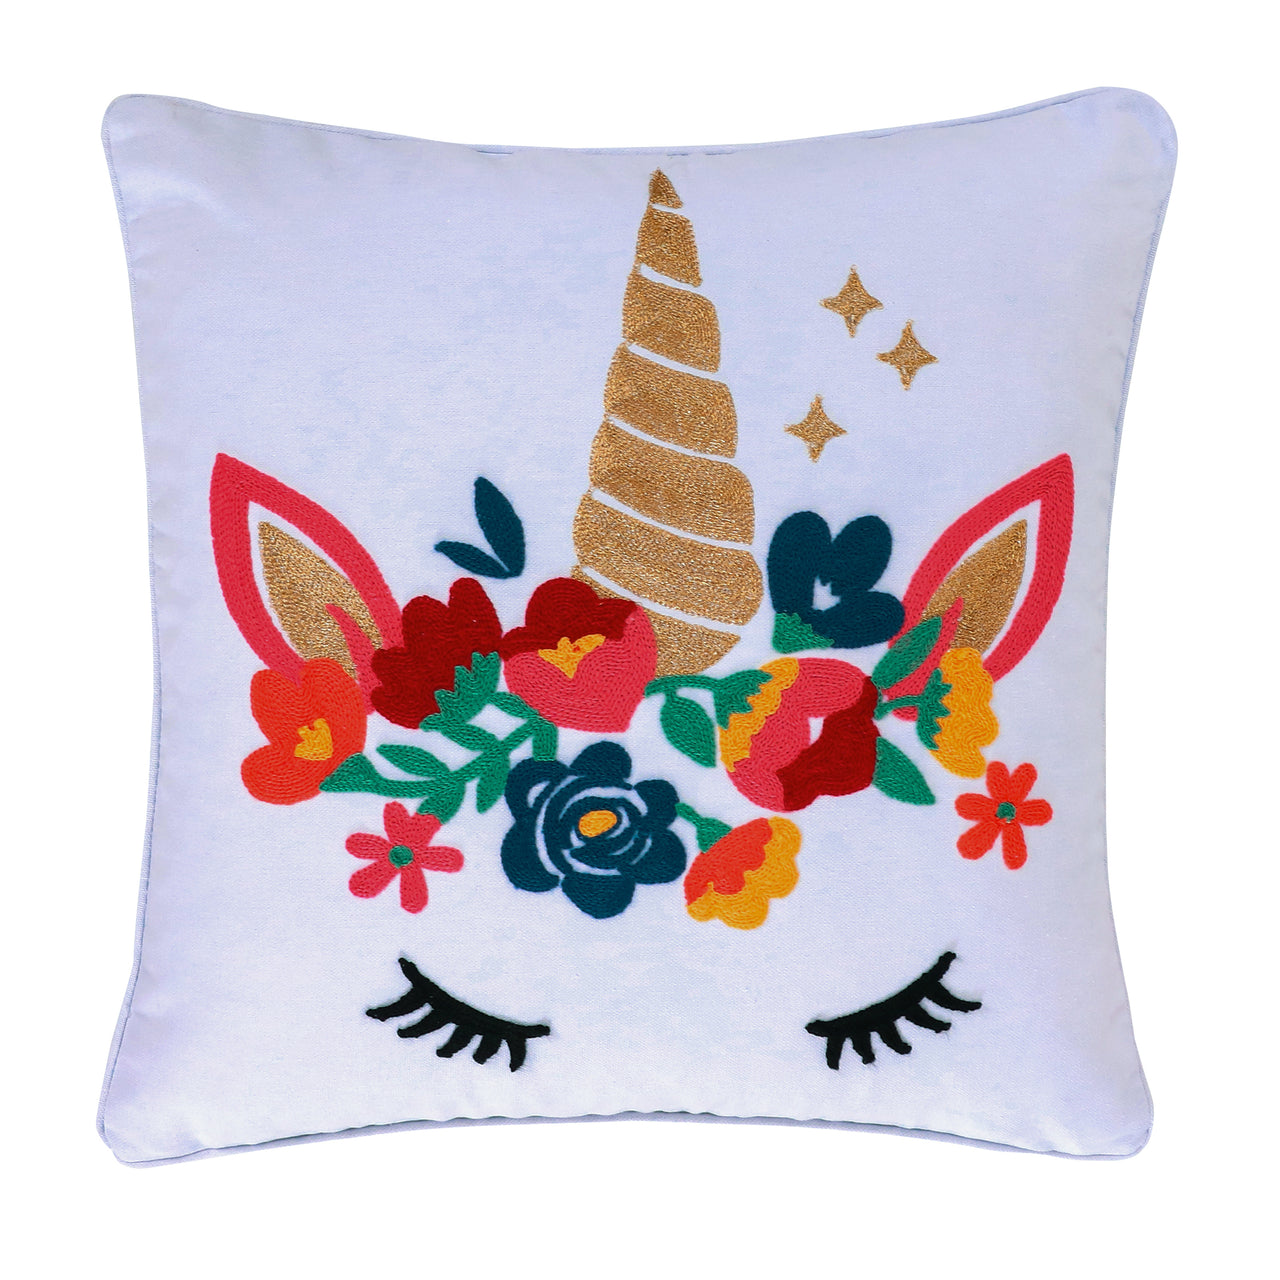 Chantal Unicorn Embroidered Pillow